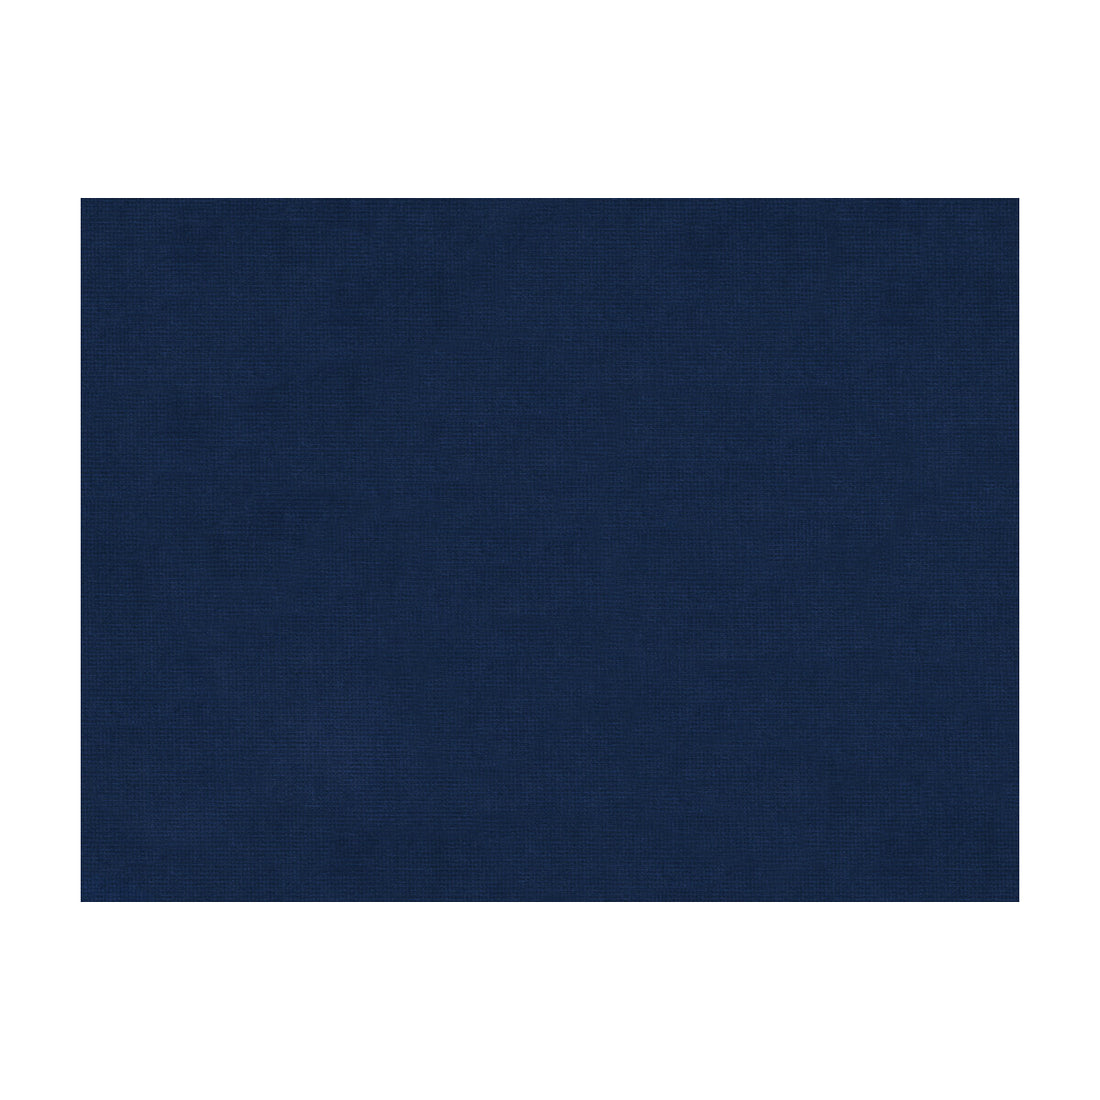 Charmant Velvet fabric in indigo color - pattern 8013150.505.0 - by Brunschwig &amp; Fils